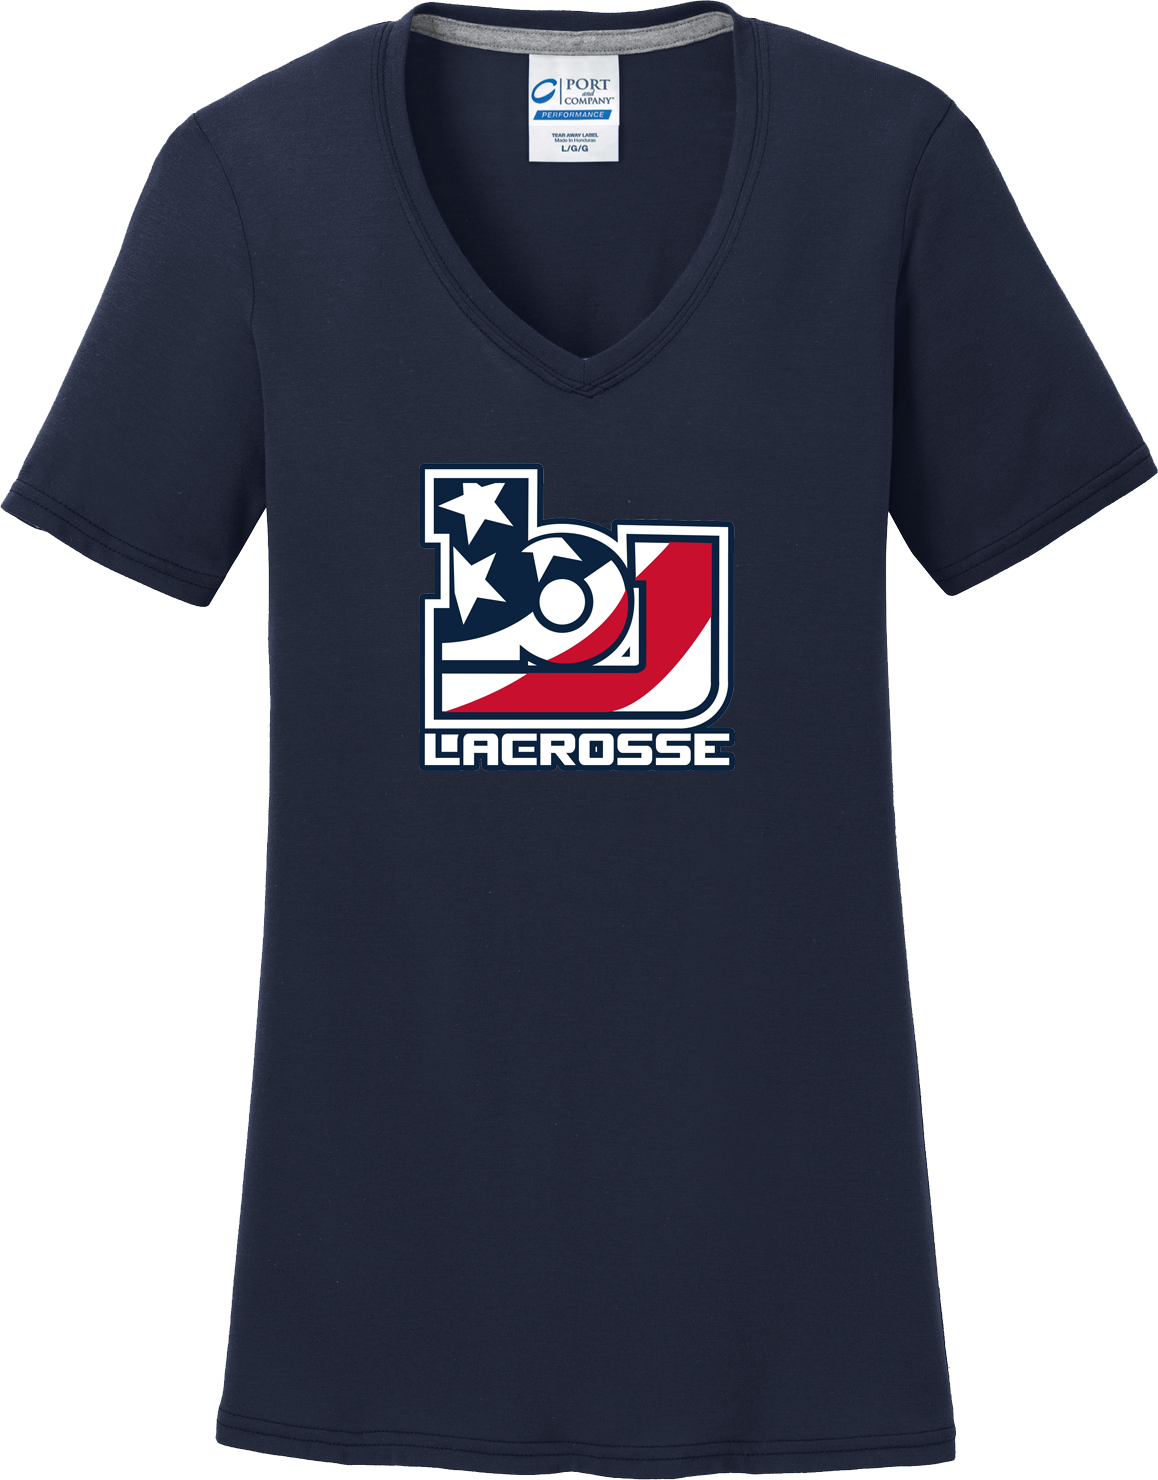 Bob Jones Lacrosse Women's Navy T-Shirt